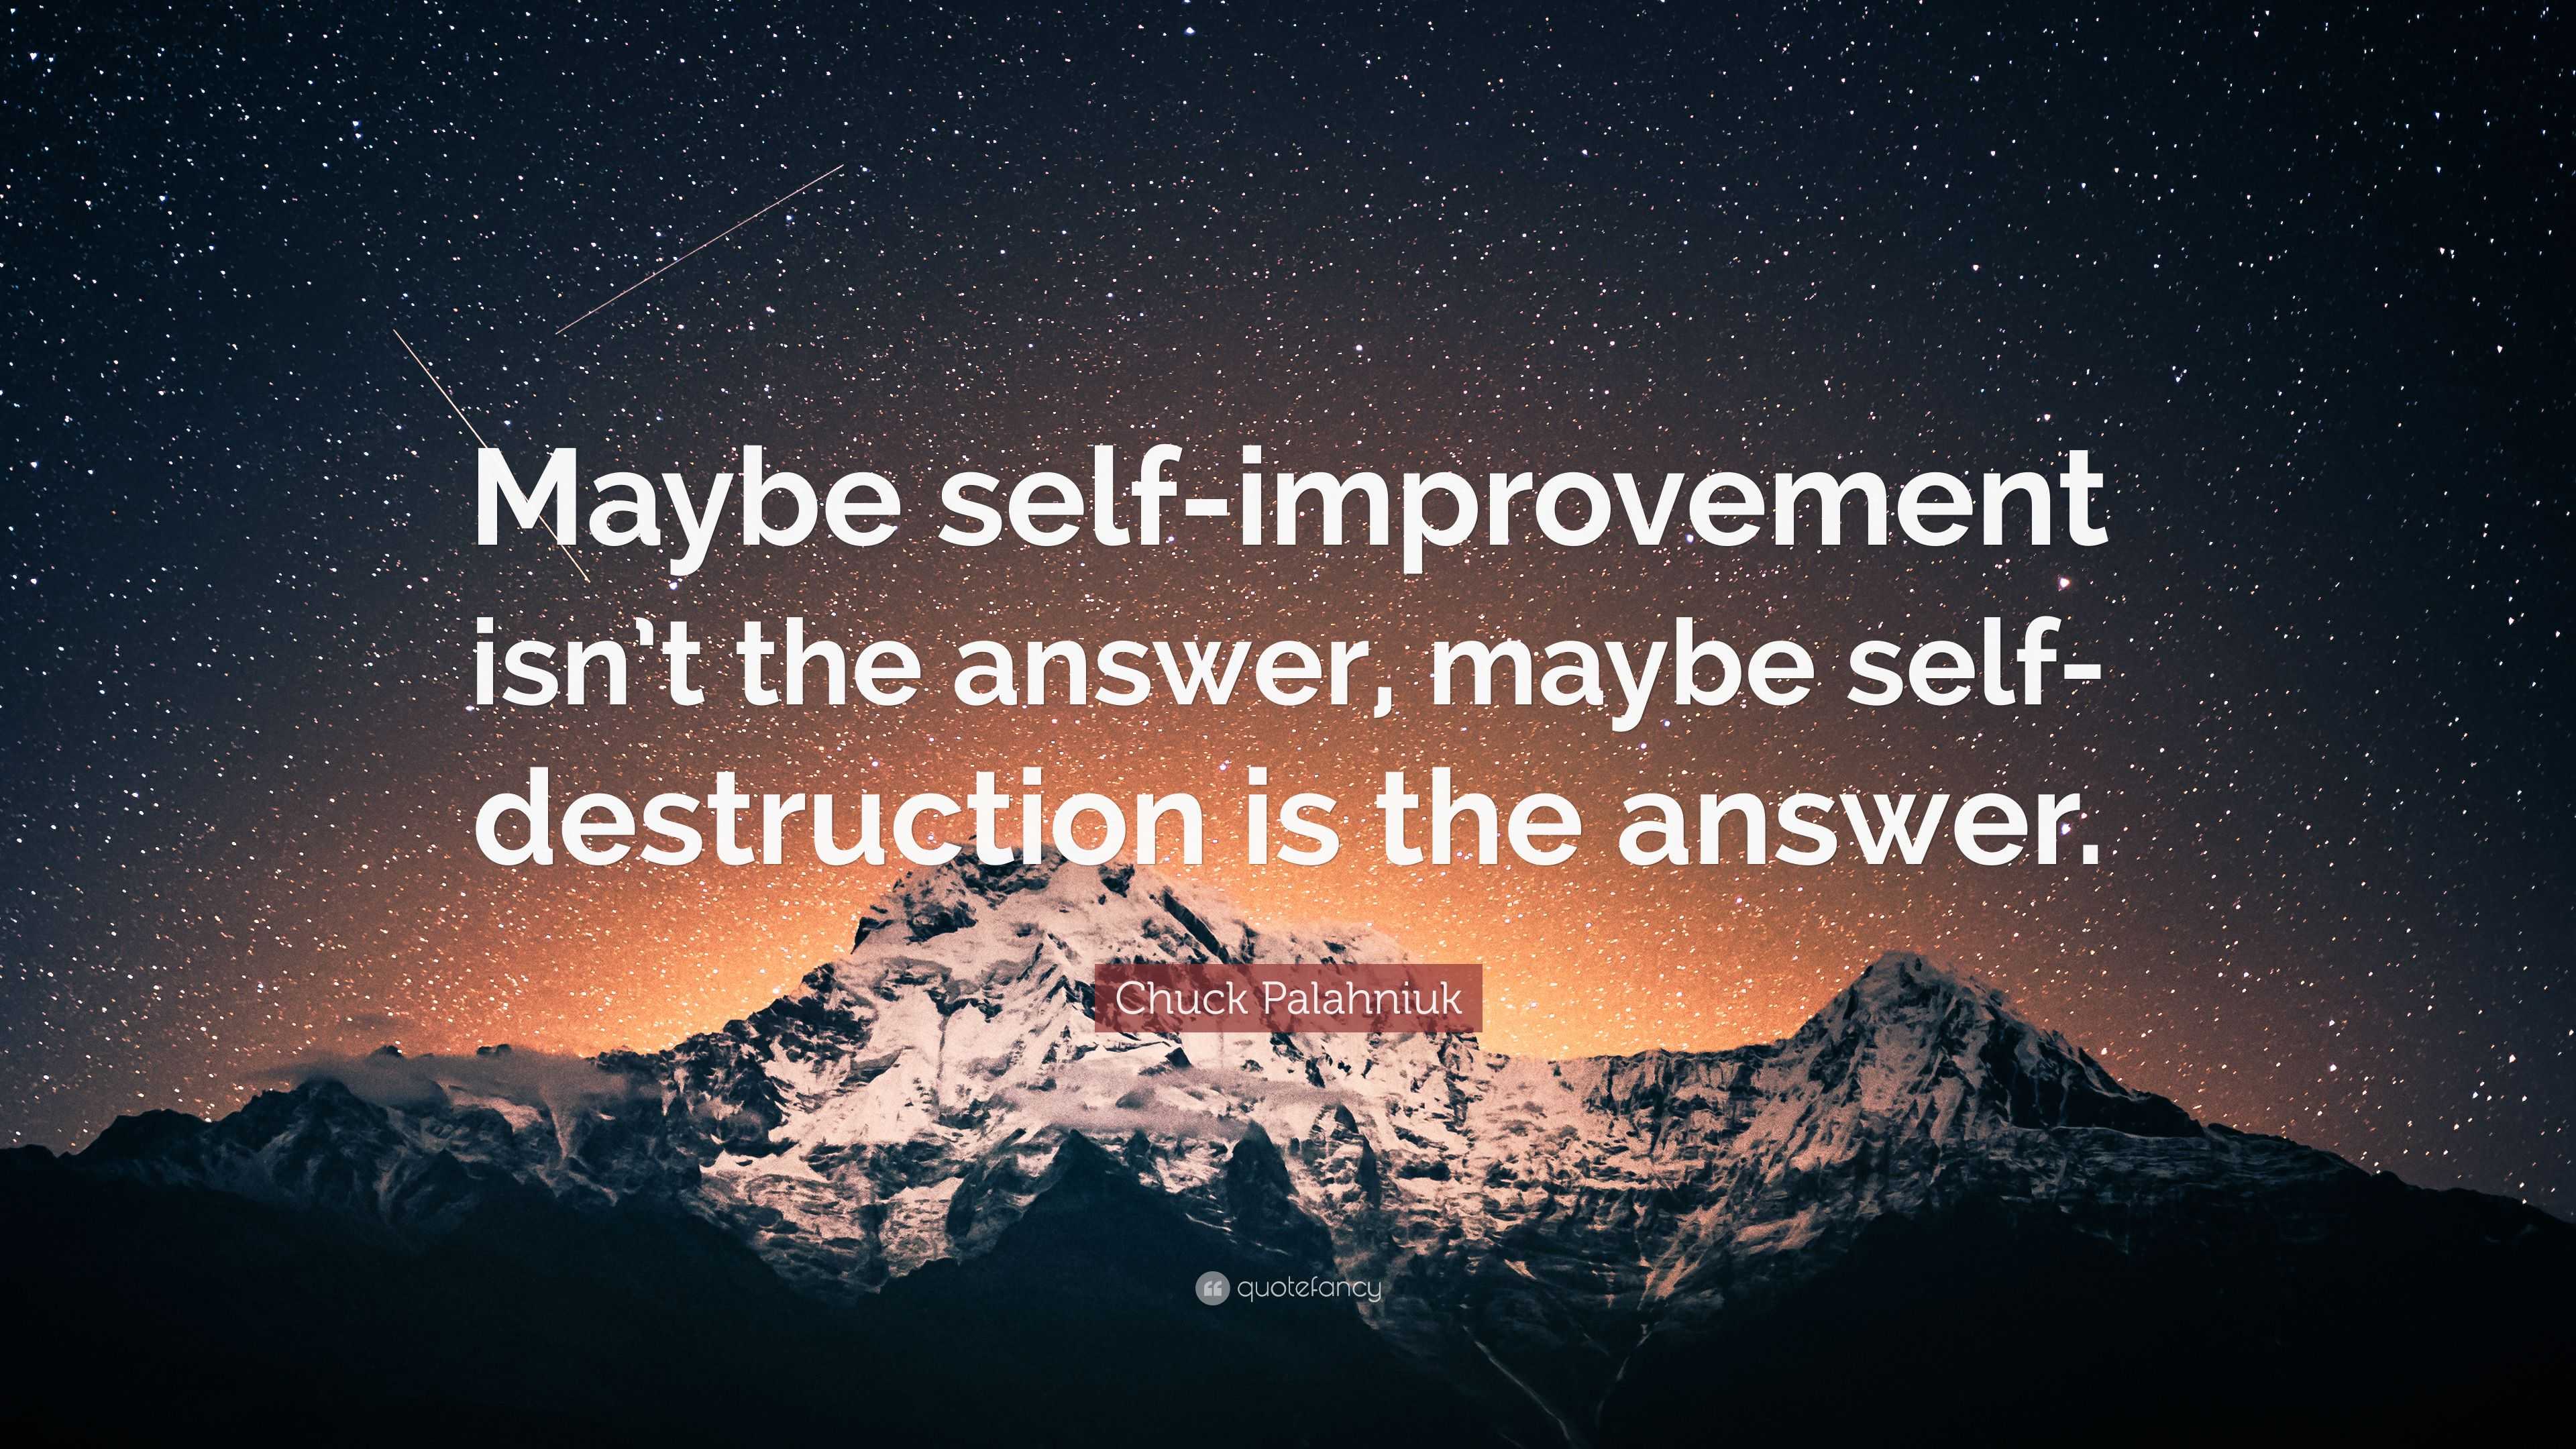 Chuck Palahniuk Quote: “Maybe self-improvement isn’t the answer, maybe ...